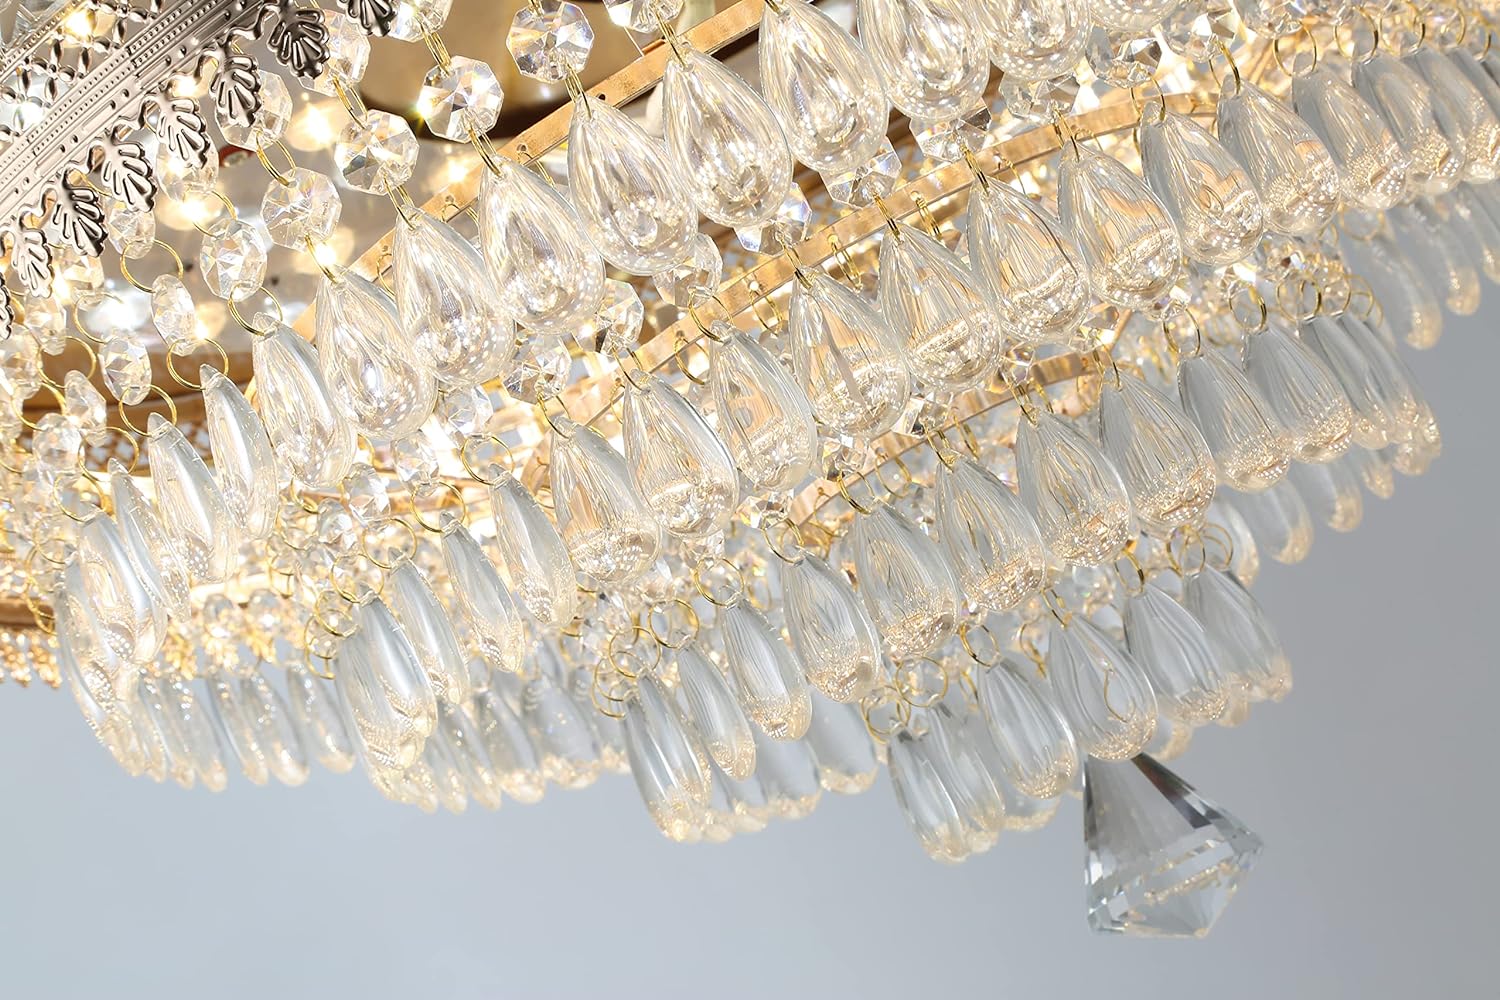 diisunbihuo 42 Modern Crystal Chandelier Ceiling Fan with Lights Gold Dimmable Fandeliers LED Invisible Fandelier Crystal Chandelier Fan 3 in 1 Color with Memory Function